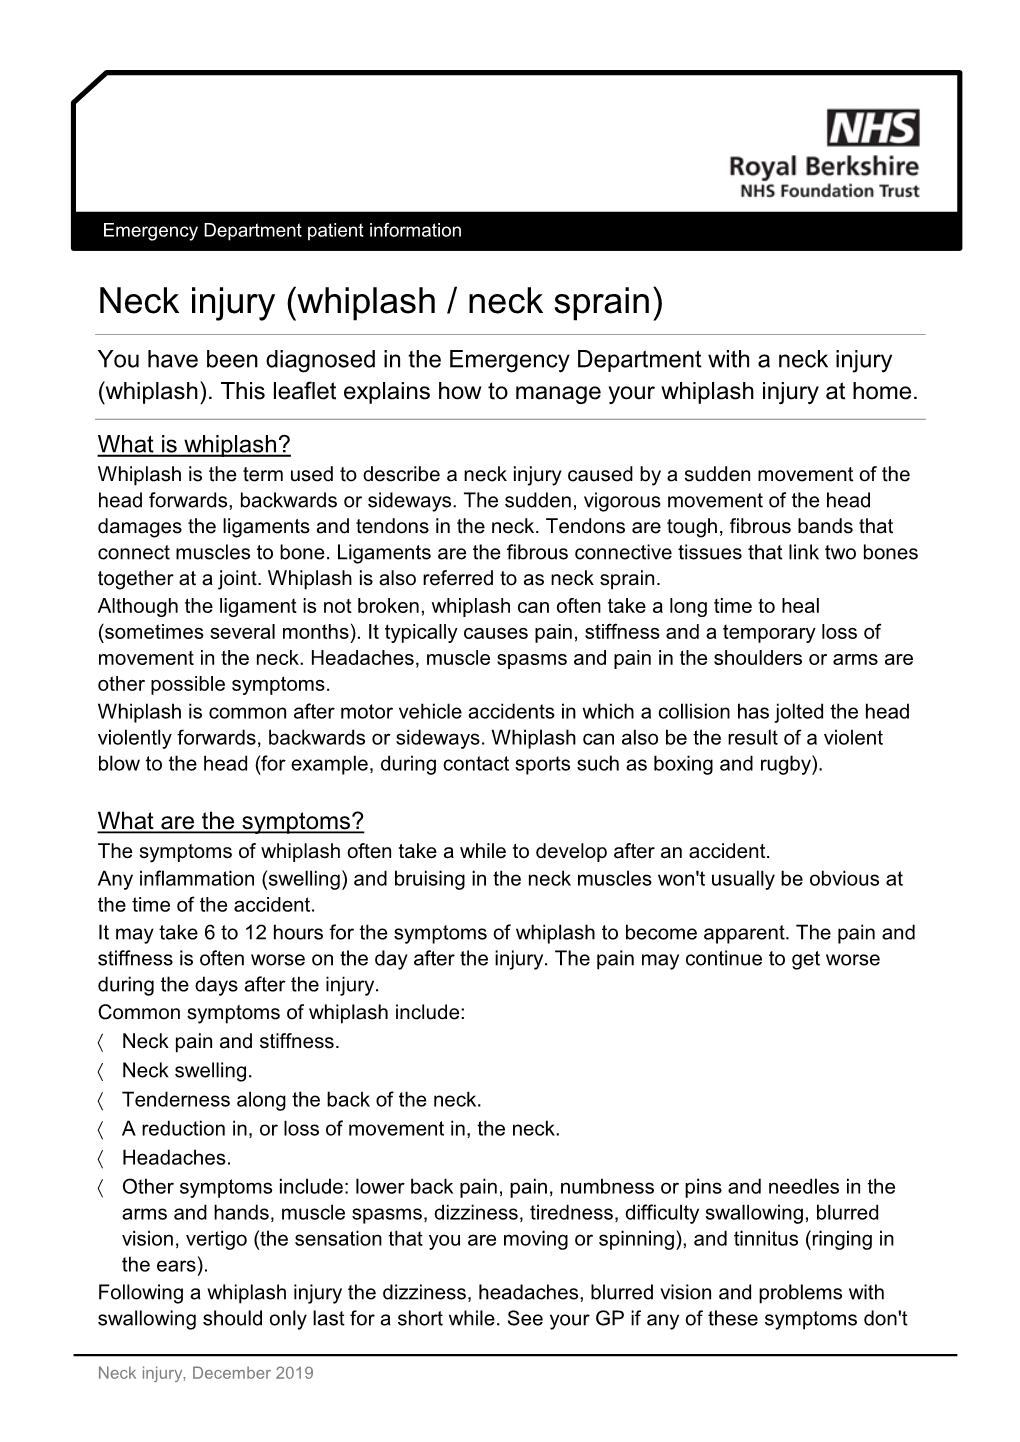 Neck Injury (Whiplash / Neck Sprain)